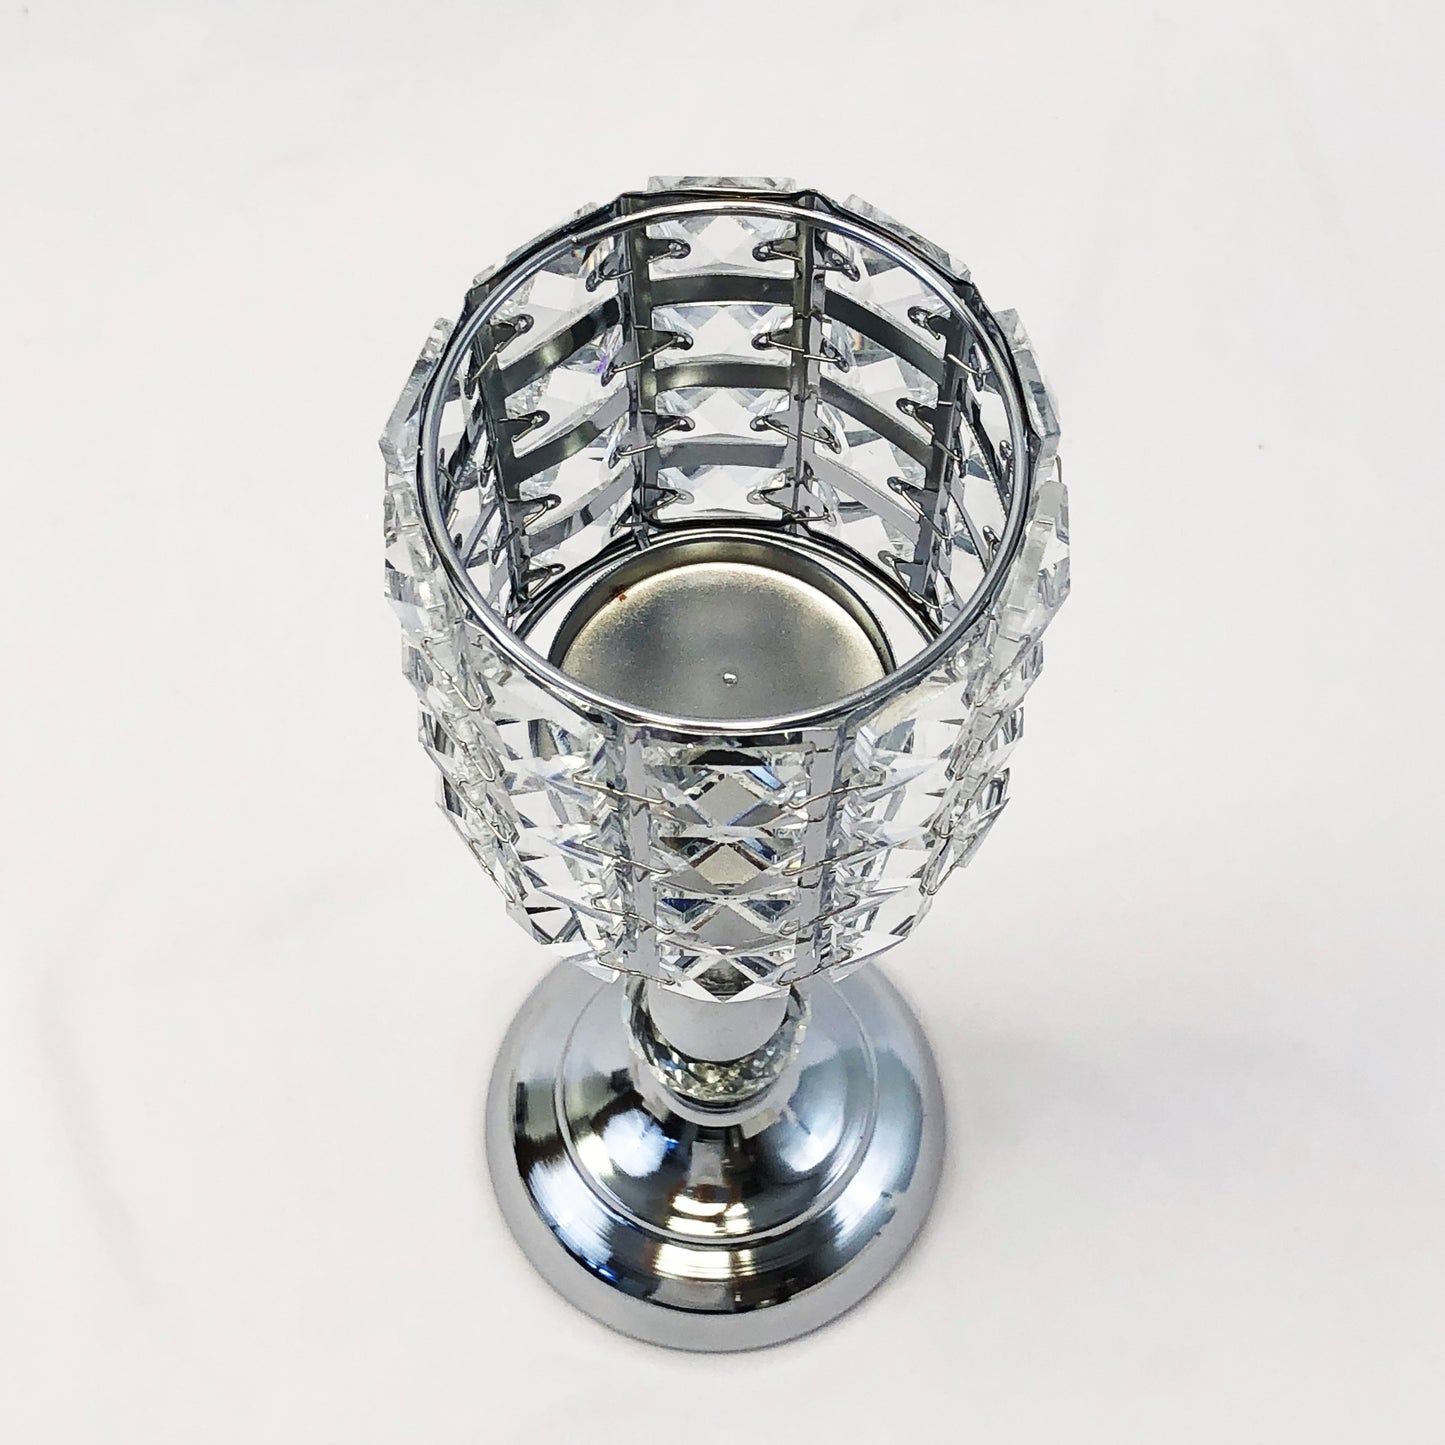 Allgala Candle Holder 13" Crystal Gold Plated Tea-light Votive Decorative Candle Holder